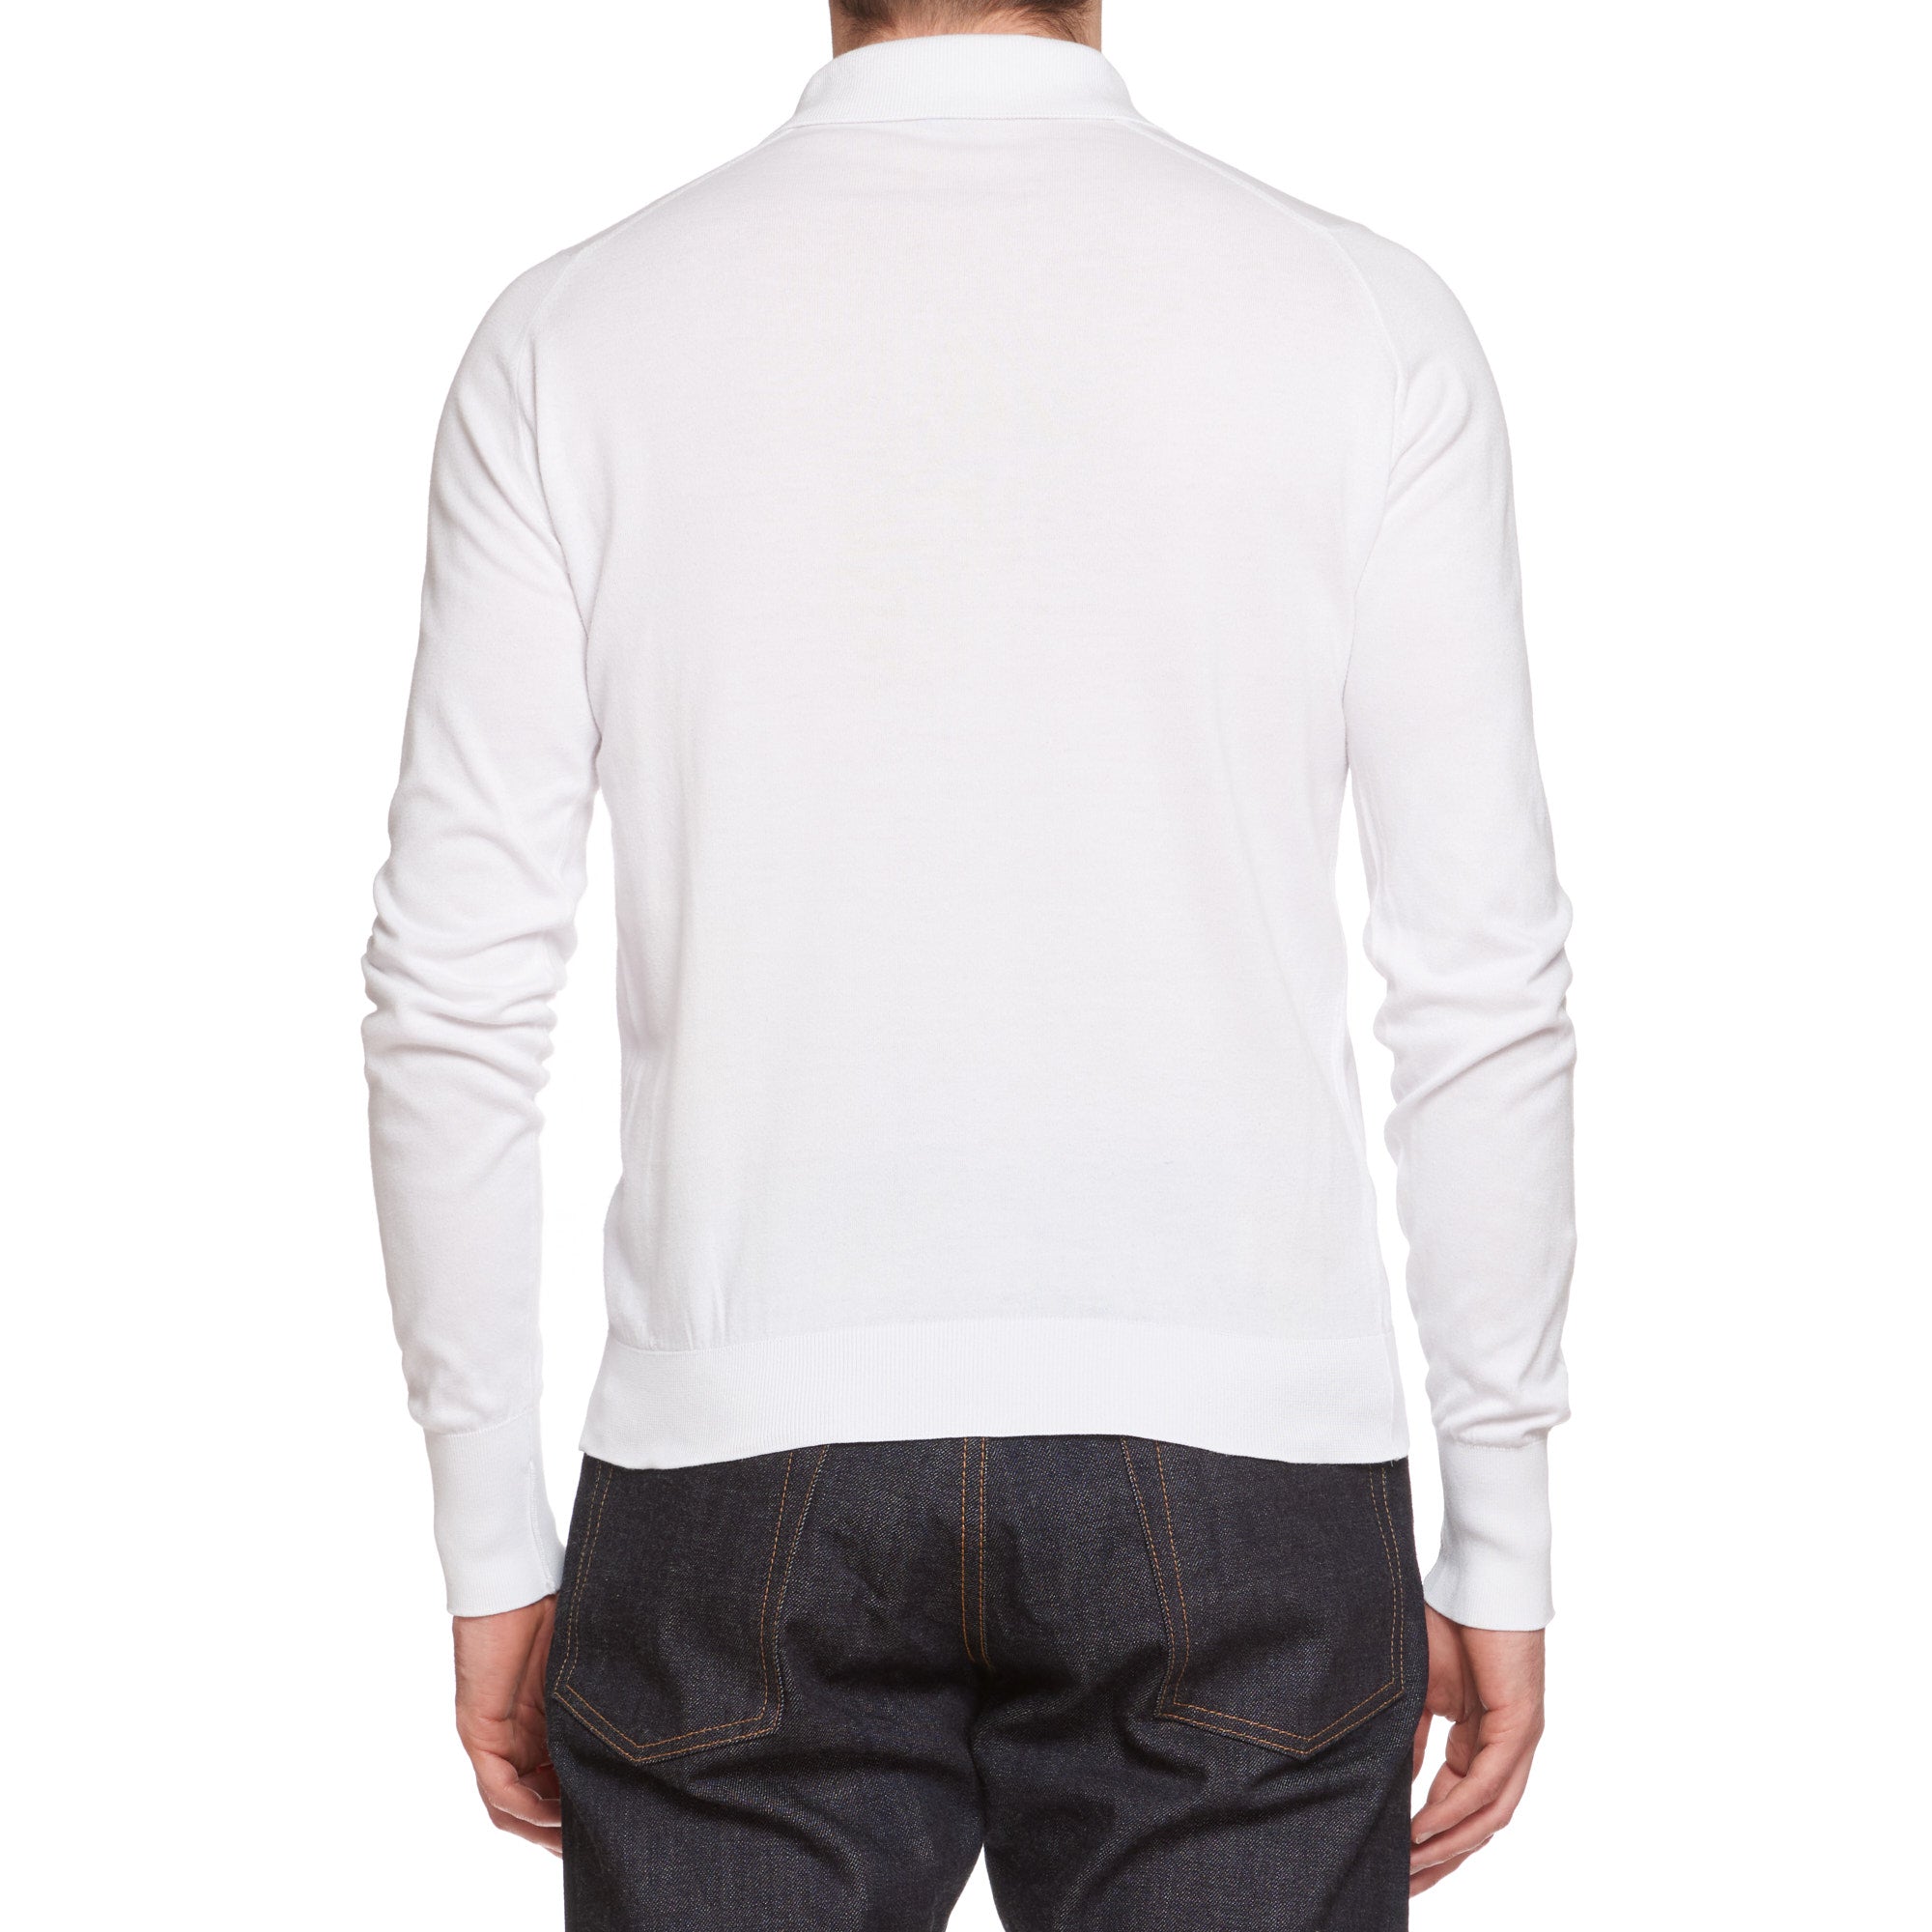 JOHN SMEDLEY White Sea Island Cotton Polo Shirt Sweater Size M UK Made